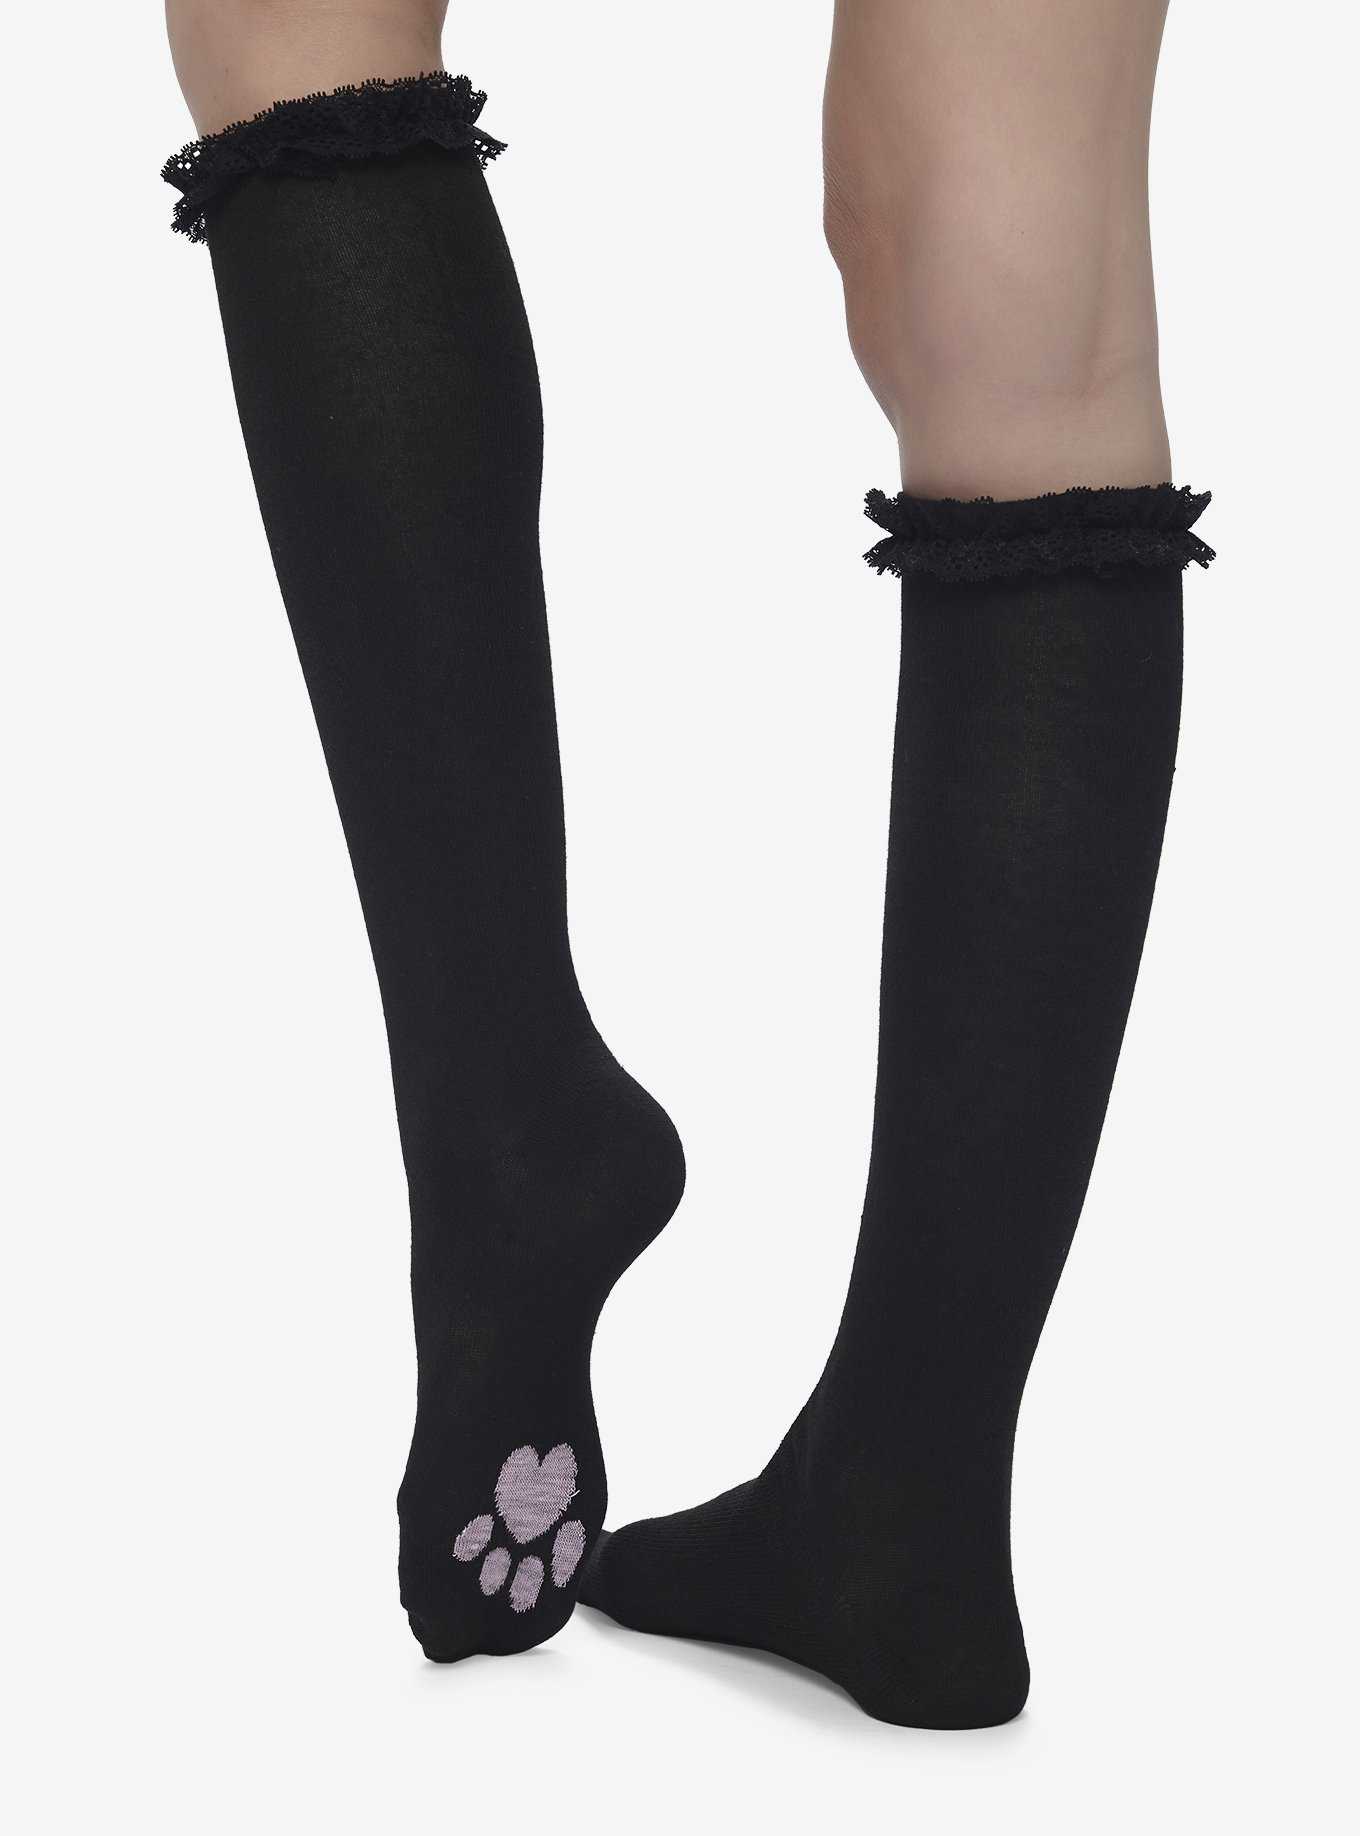 Girls' Casual Knee High Socks - Cat & Jack™ 2pk Black S